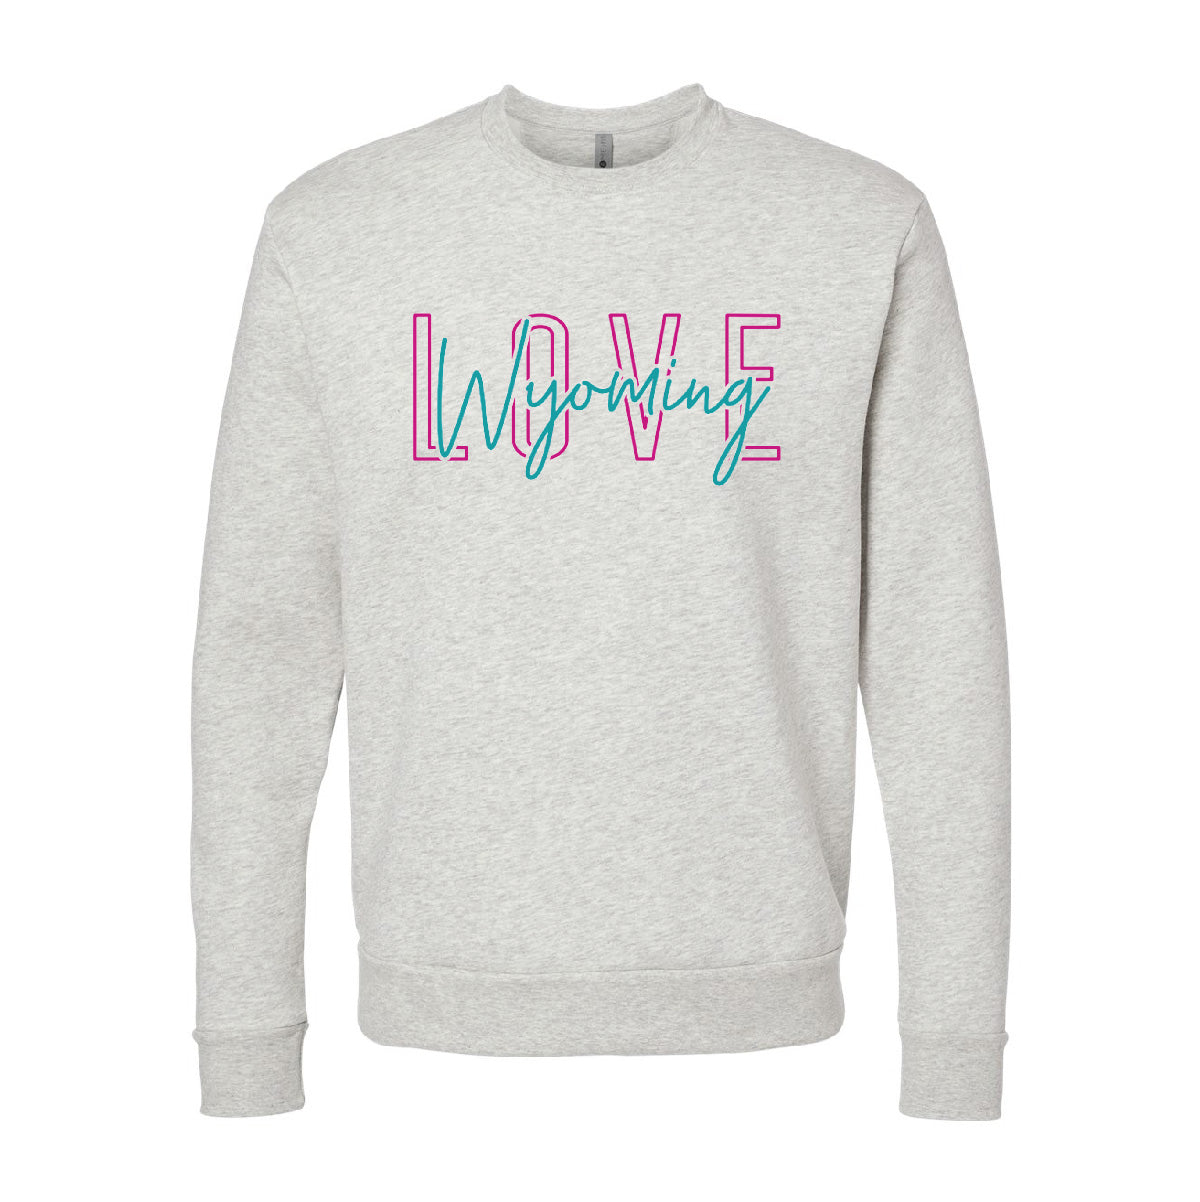 Wyoming Crewneck Sweatshirt - Valentine's Shirt - Roam Around Wear is a Wyoming t-shirt company based in Gillette, Wyoming.